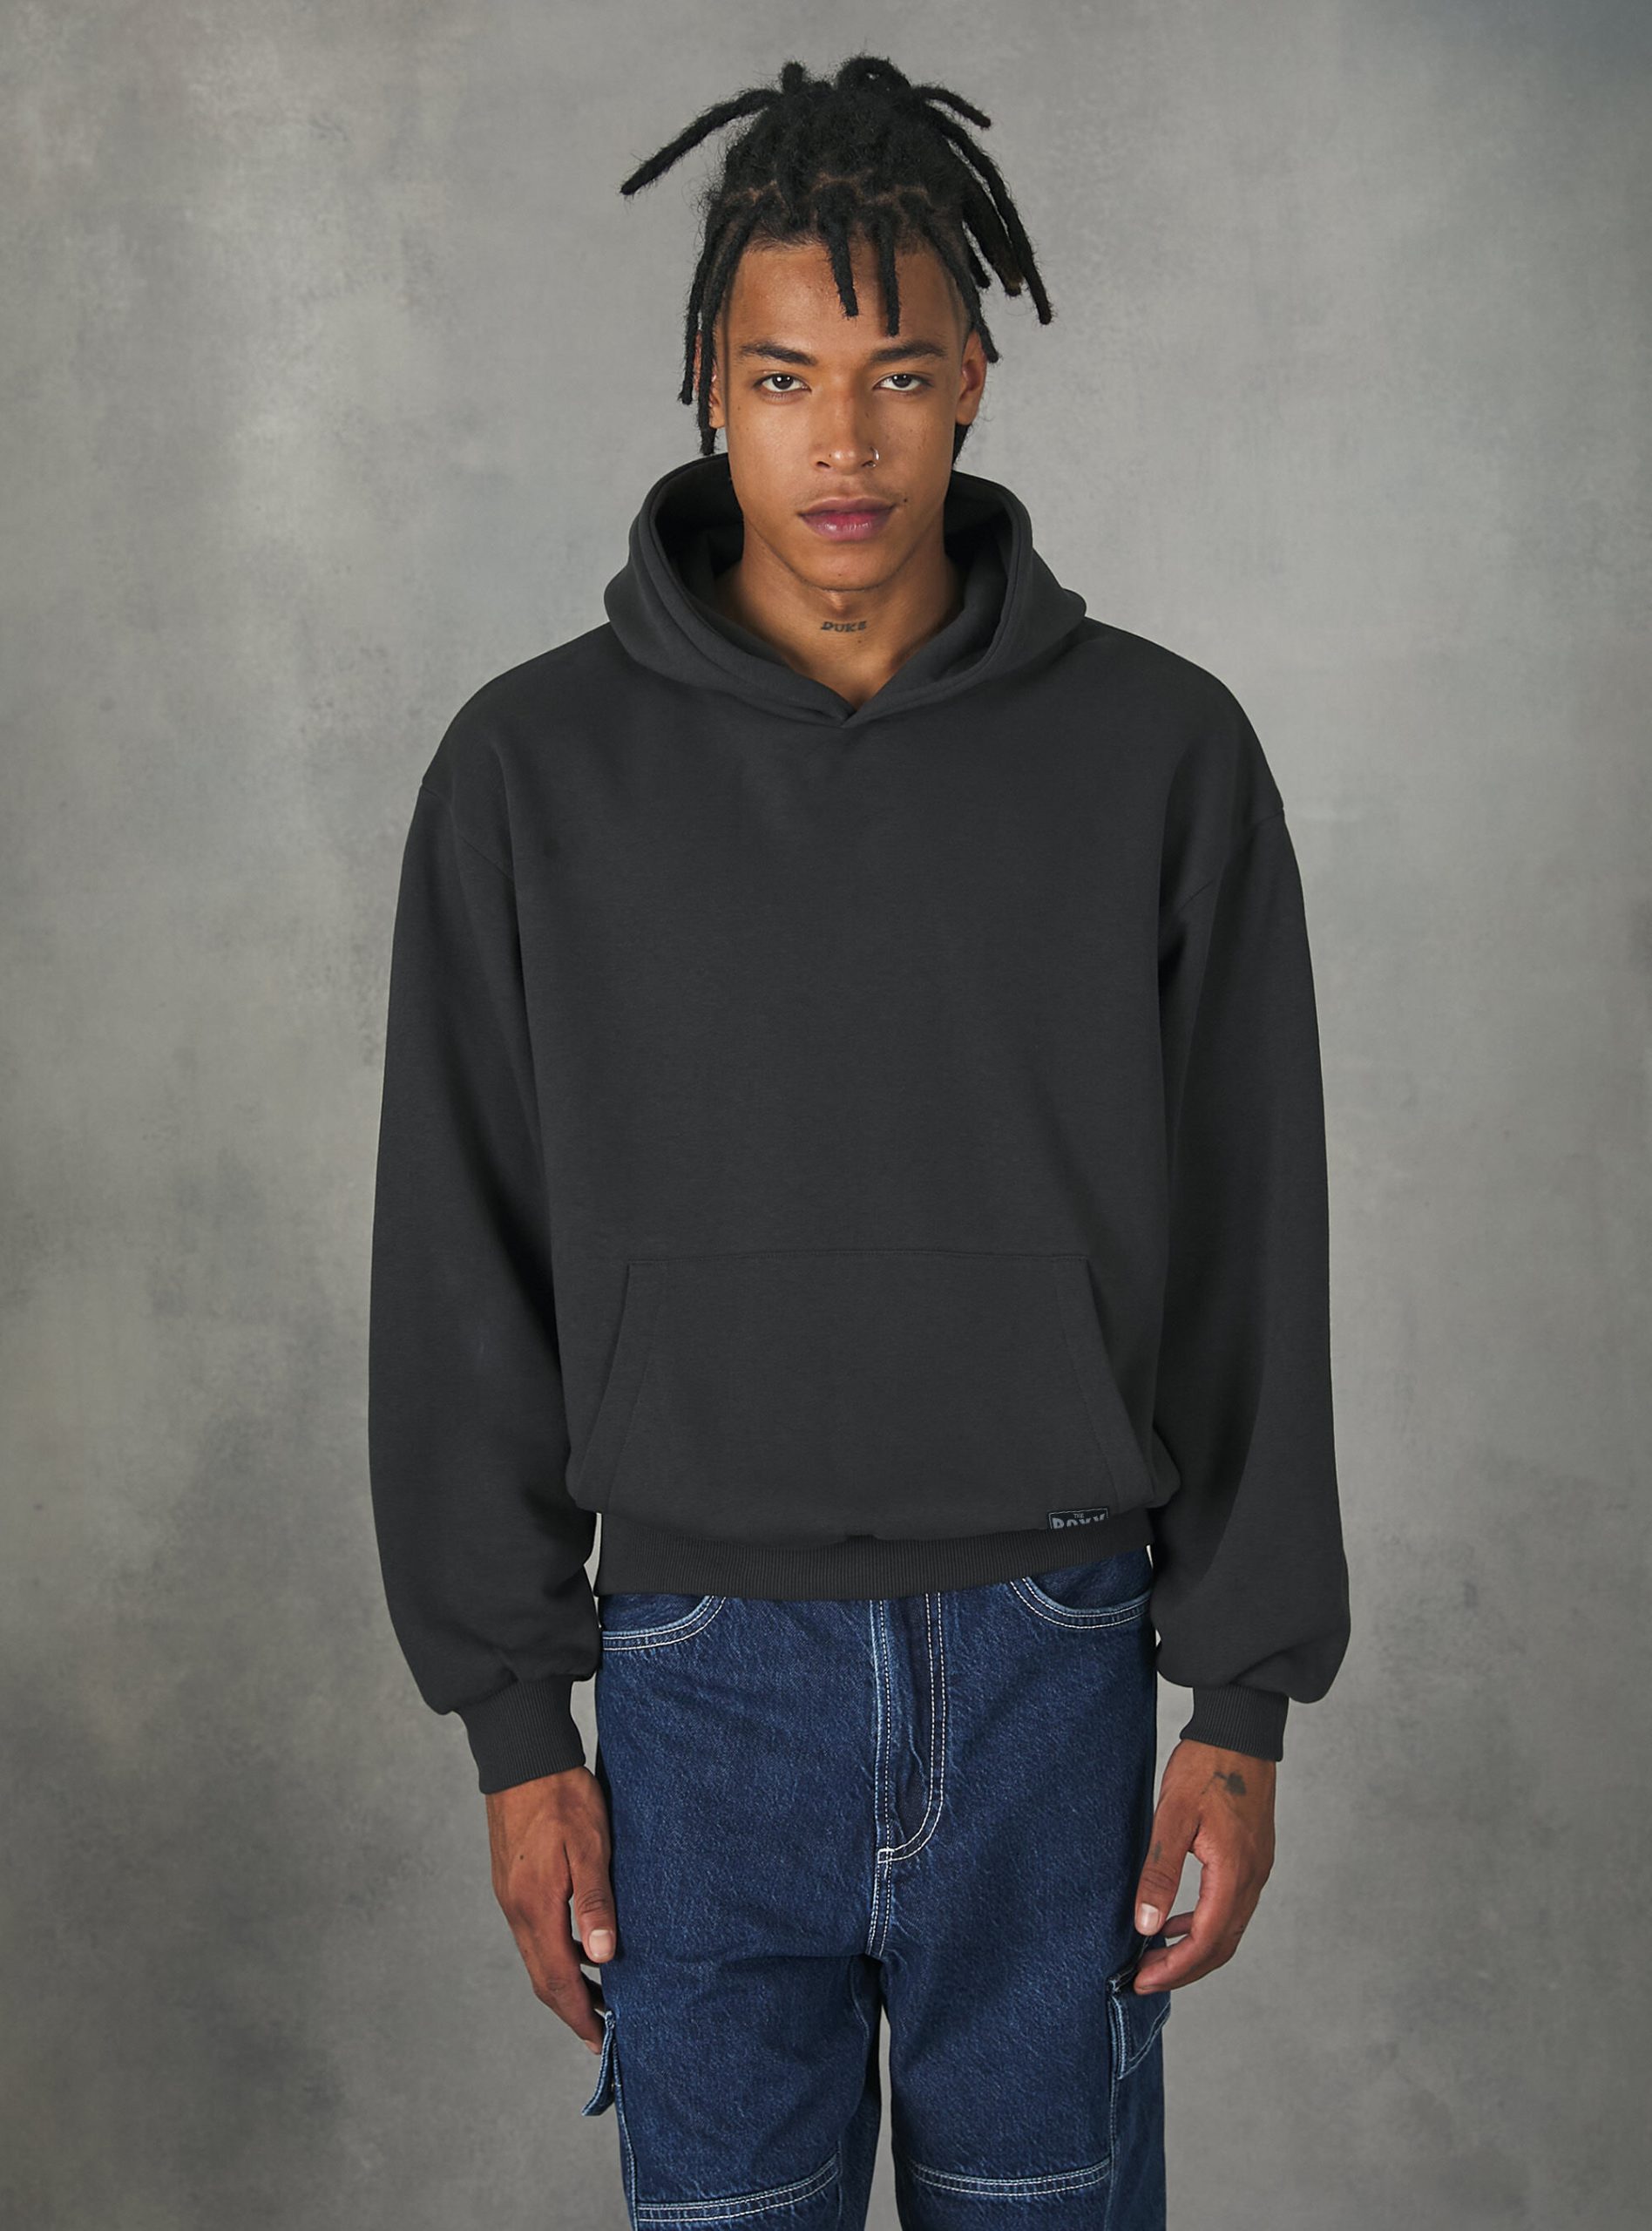 Bk3 Black Charcoal Boxy Fit Sweatshirt Mit Kapuze Alcott Männer Sweatshirts Norm – 2